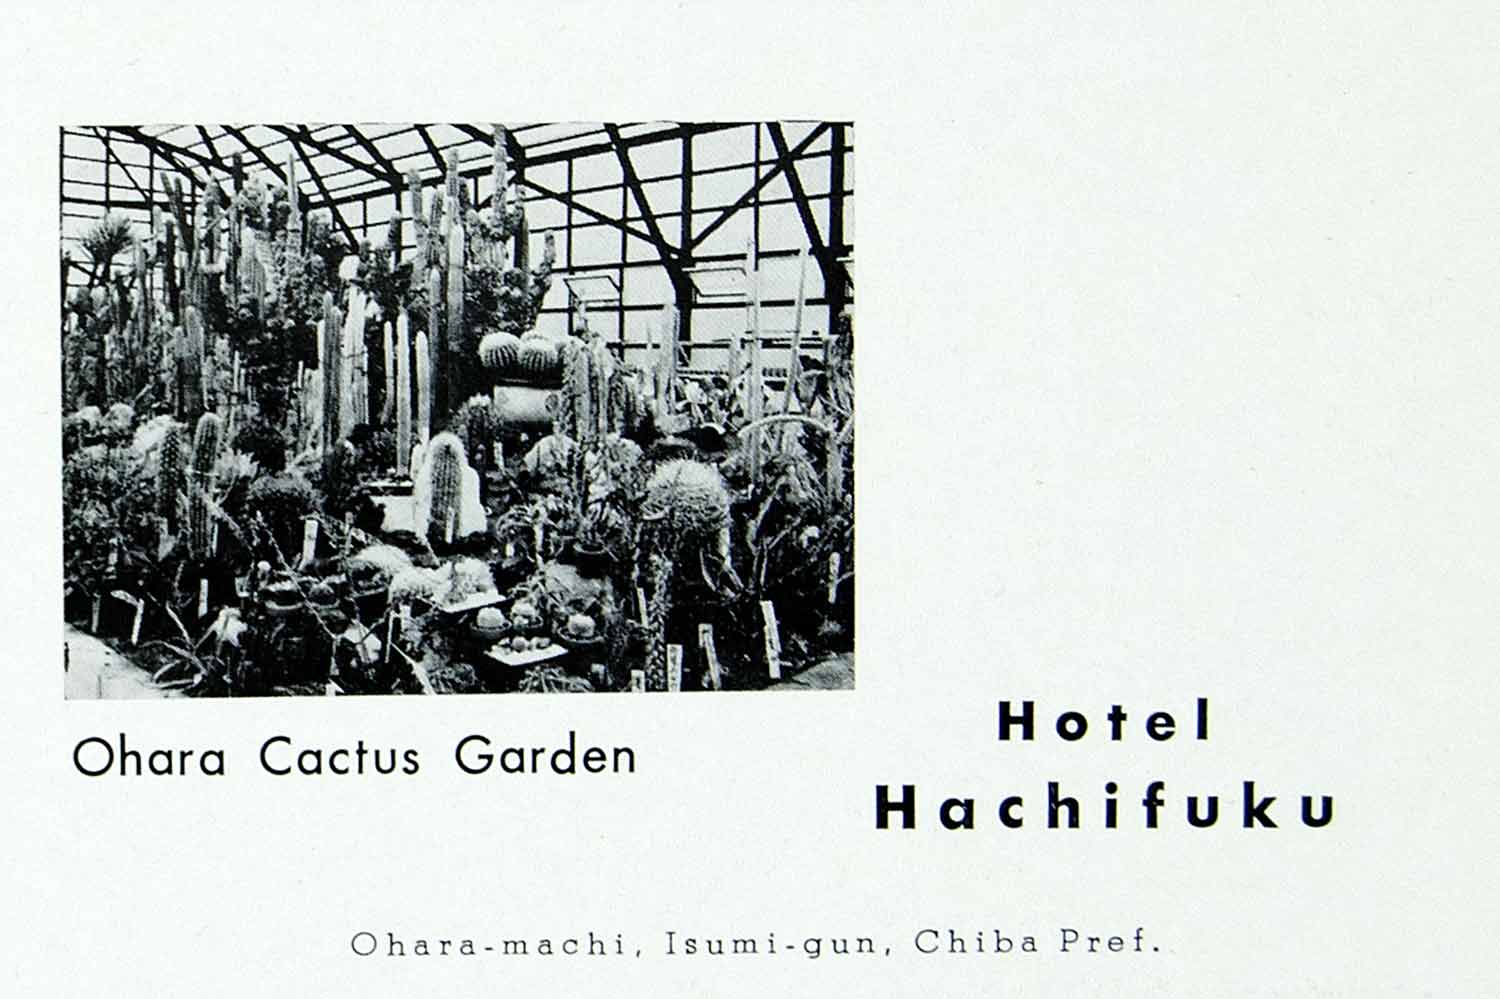 1968 Ad Ohara Cactus Garden Hotel Hachifuku Chiba Isumigun Japanese XGGD7